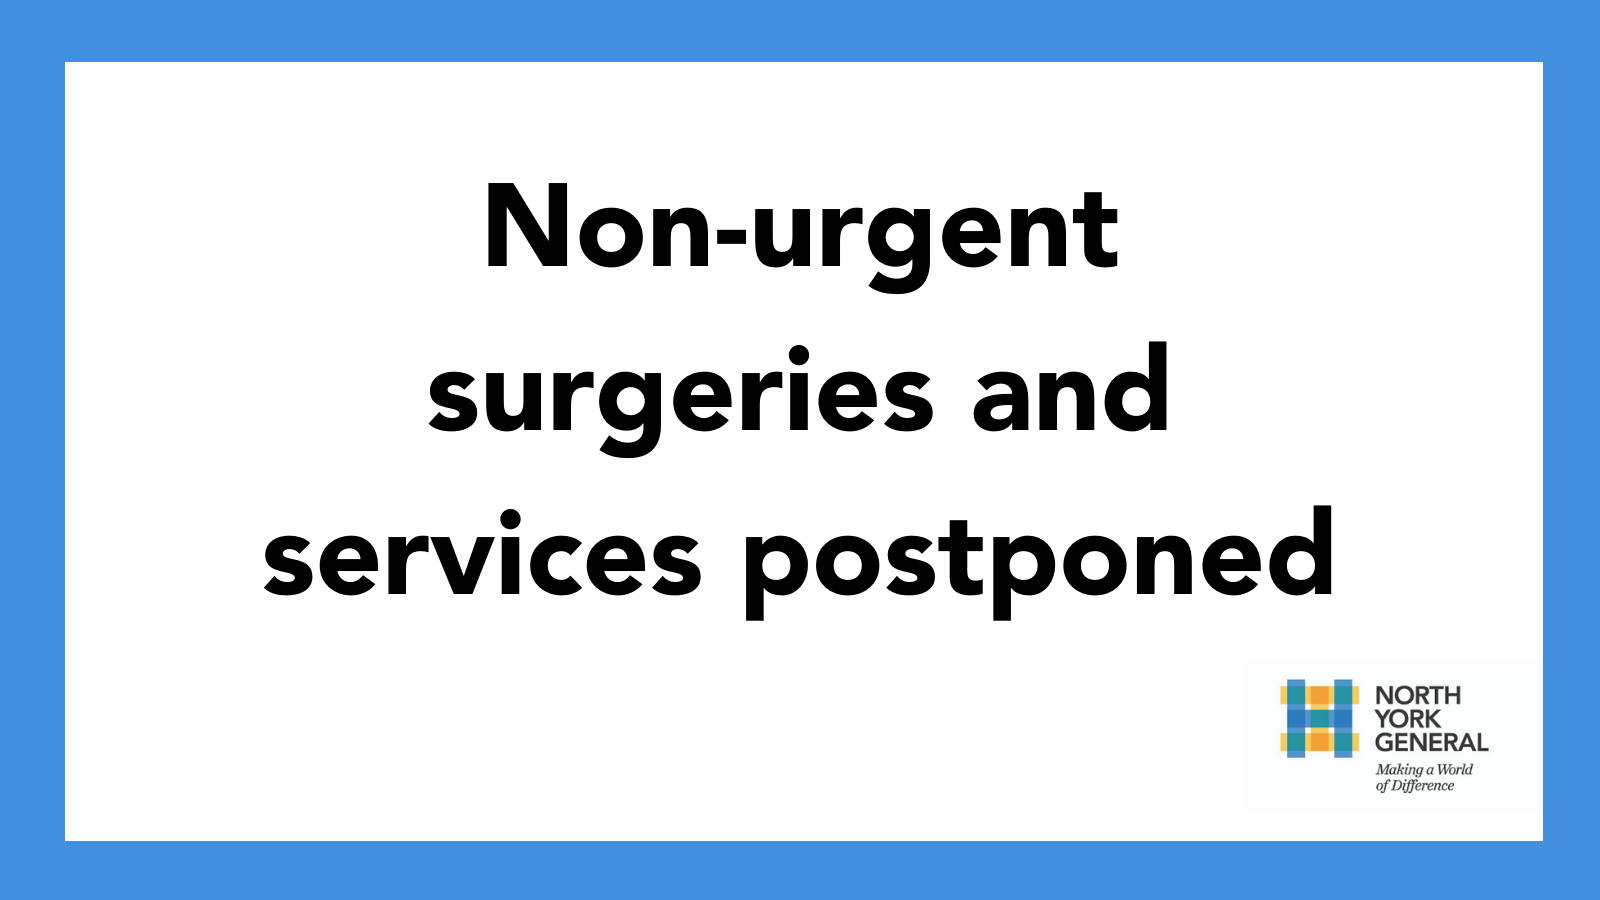 Non-urgent surgeries and services postponed